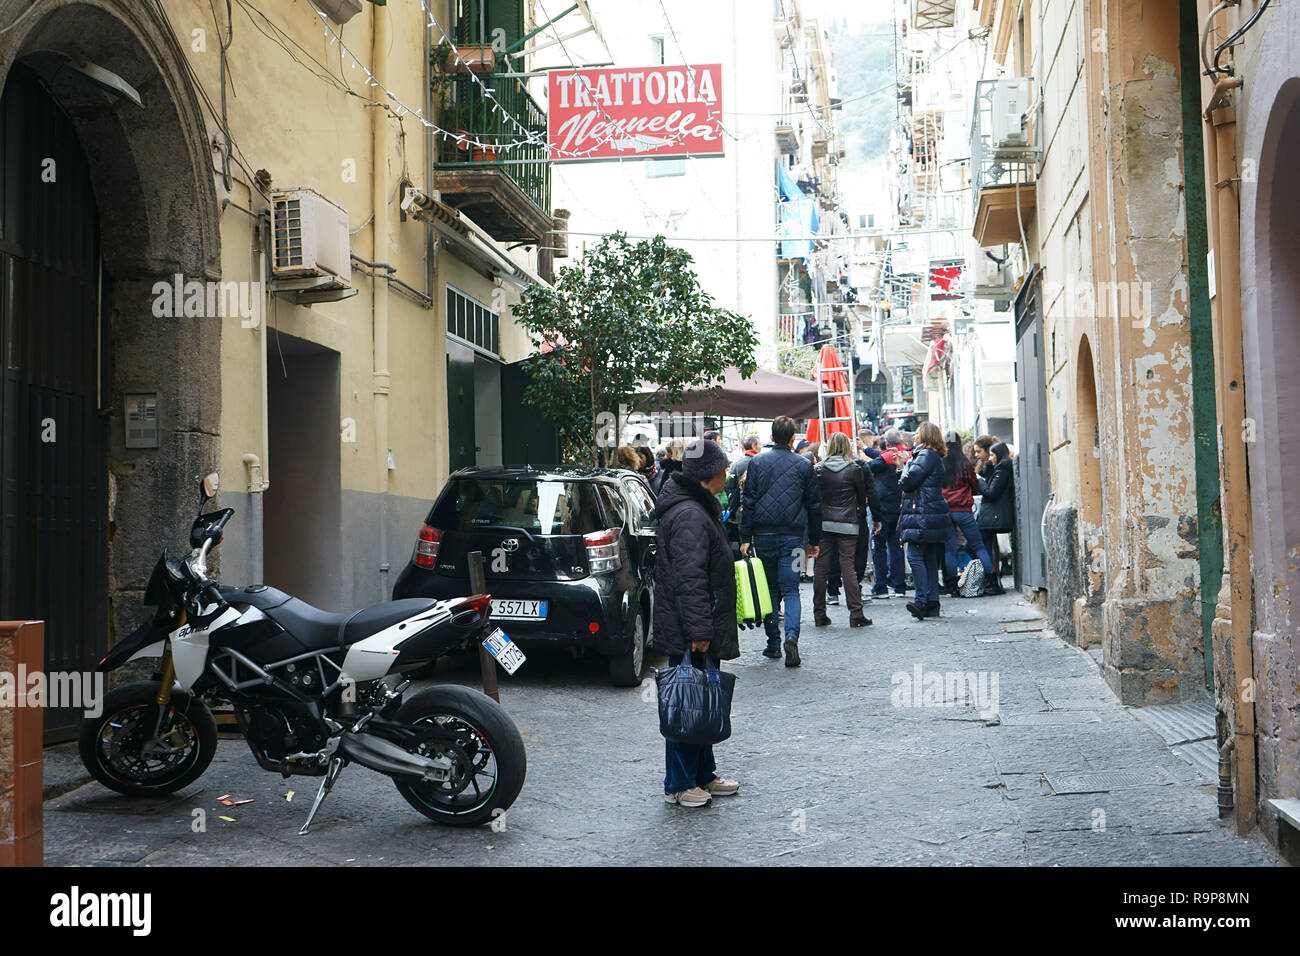 Trattoria Mennella, quartieri spagnoli, Naples, Italy -  spanish quarter Stock Photo